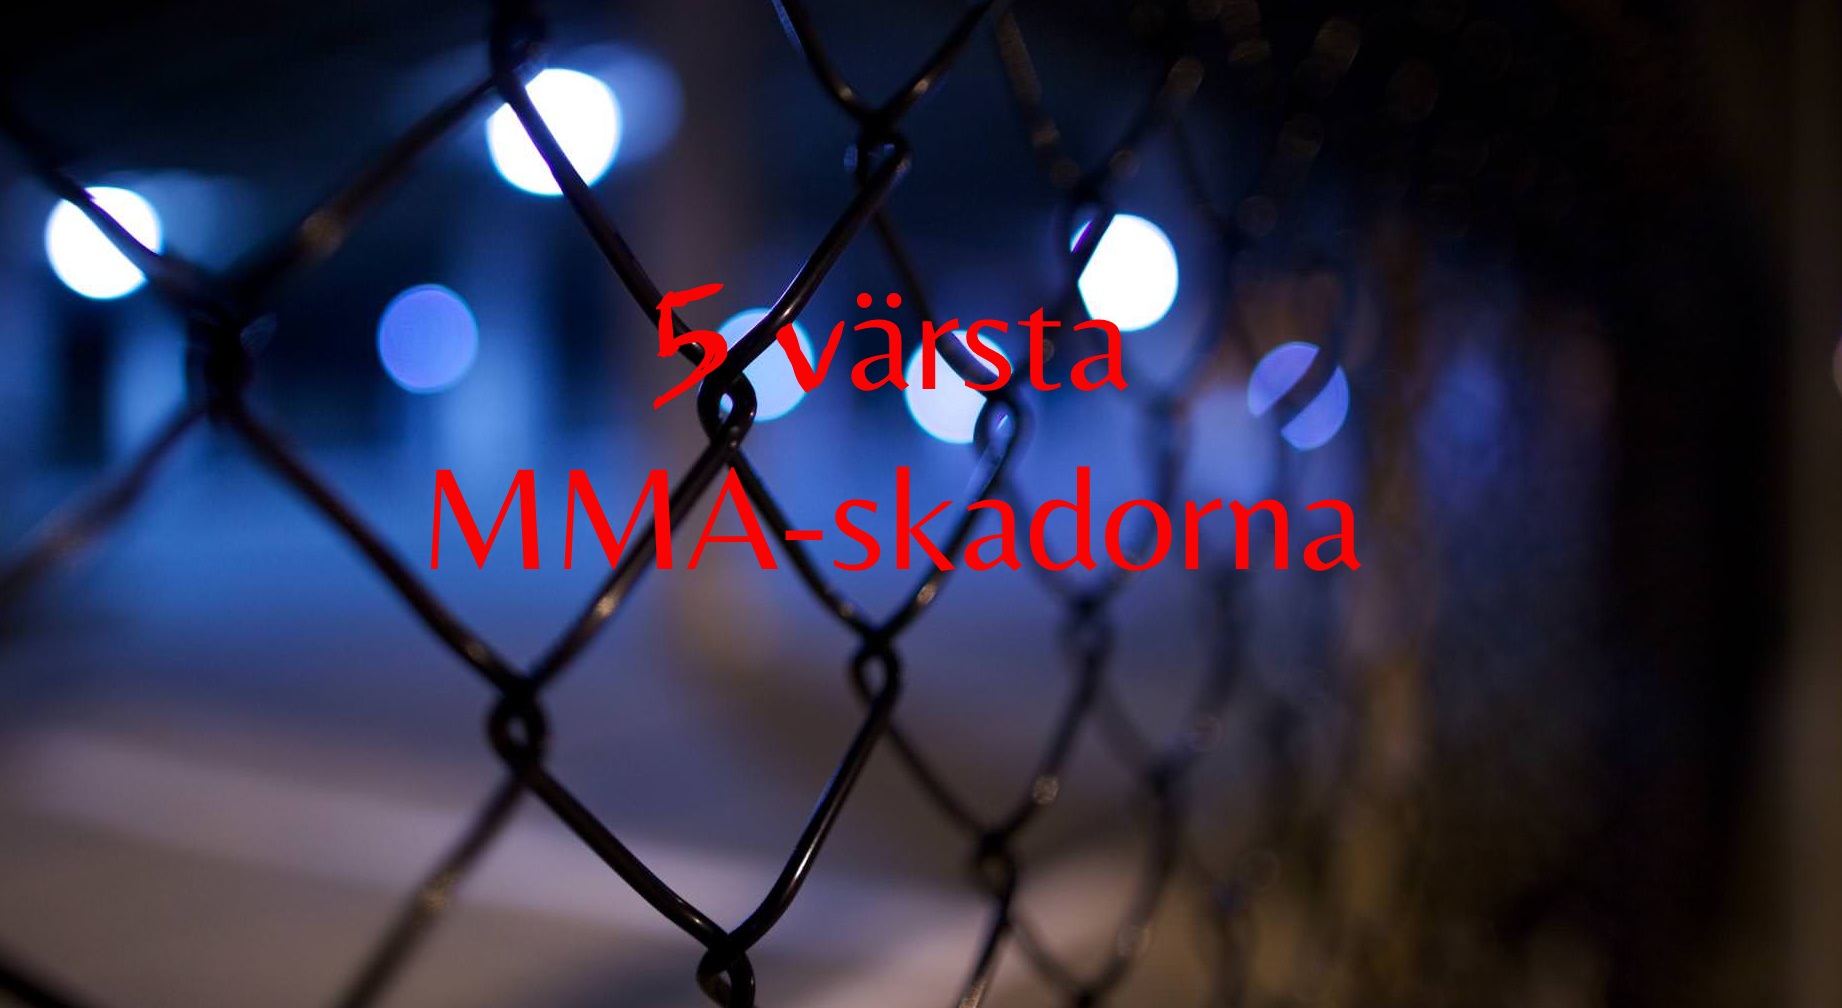 MMA-skador huvudbild